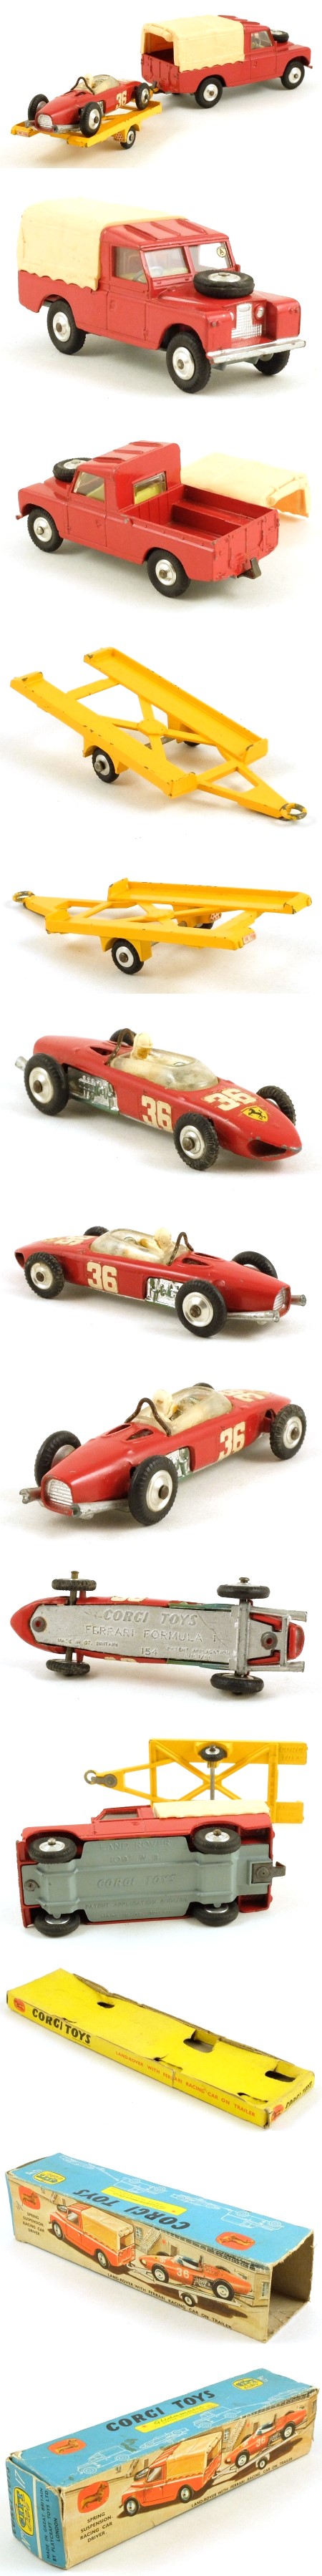 GS17 Ferrari Racing Set